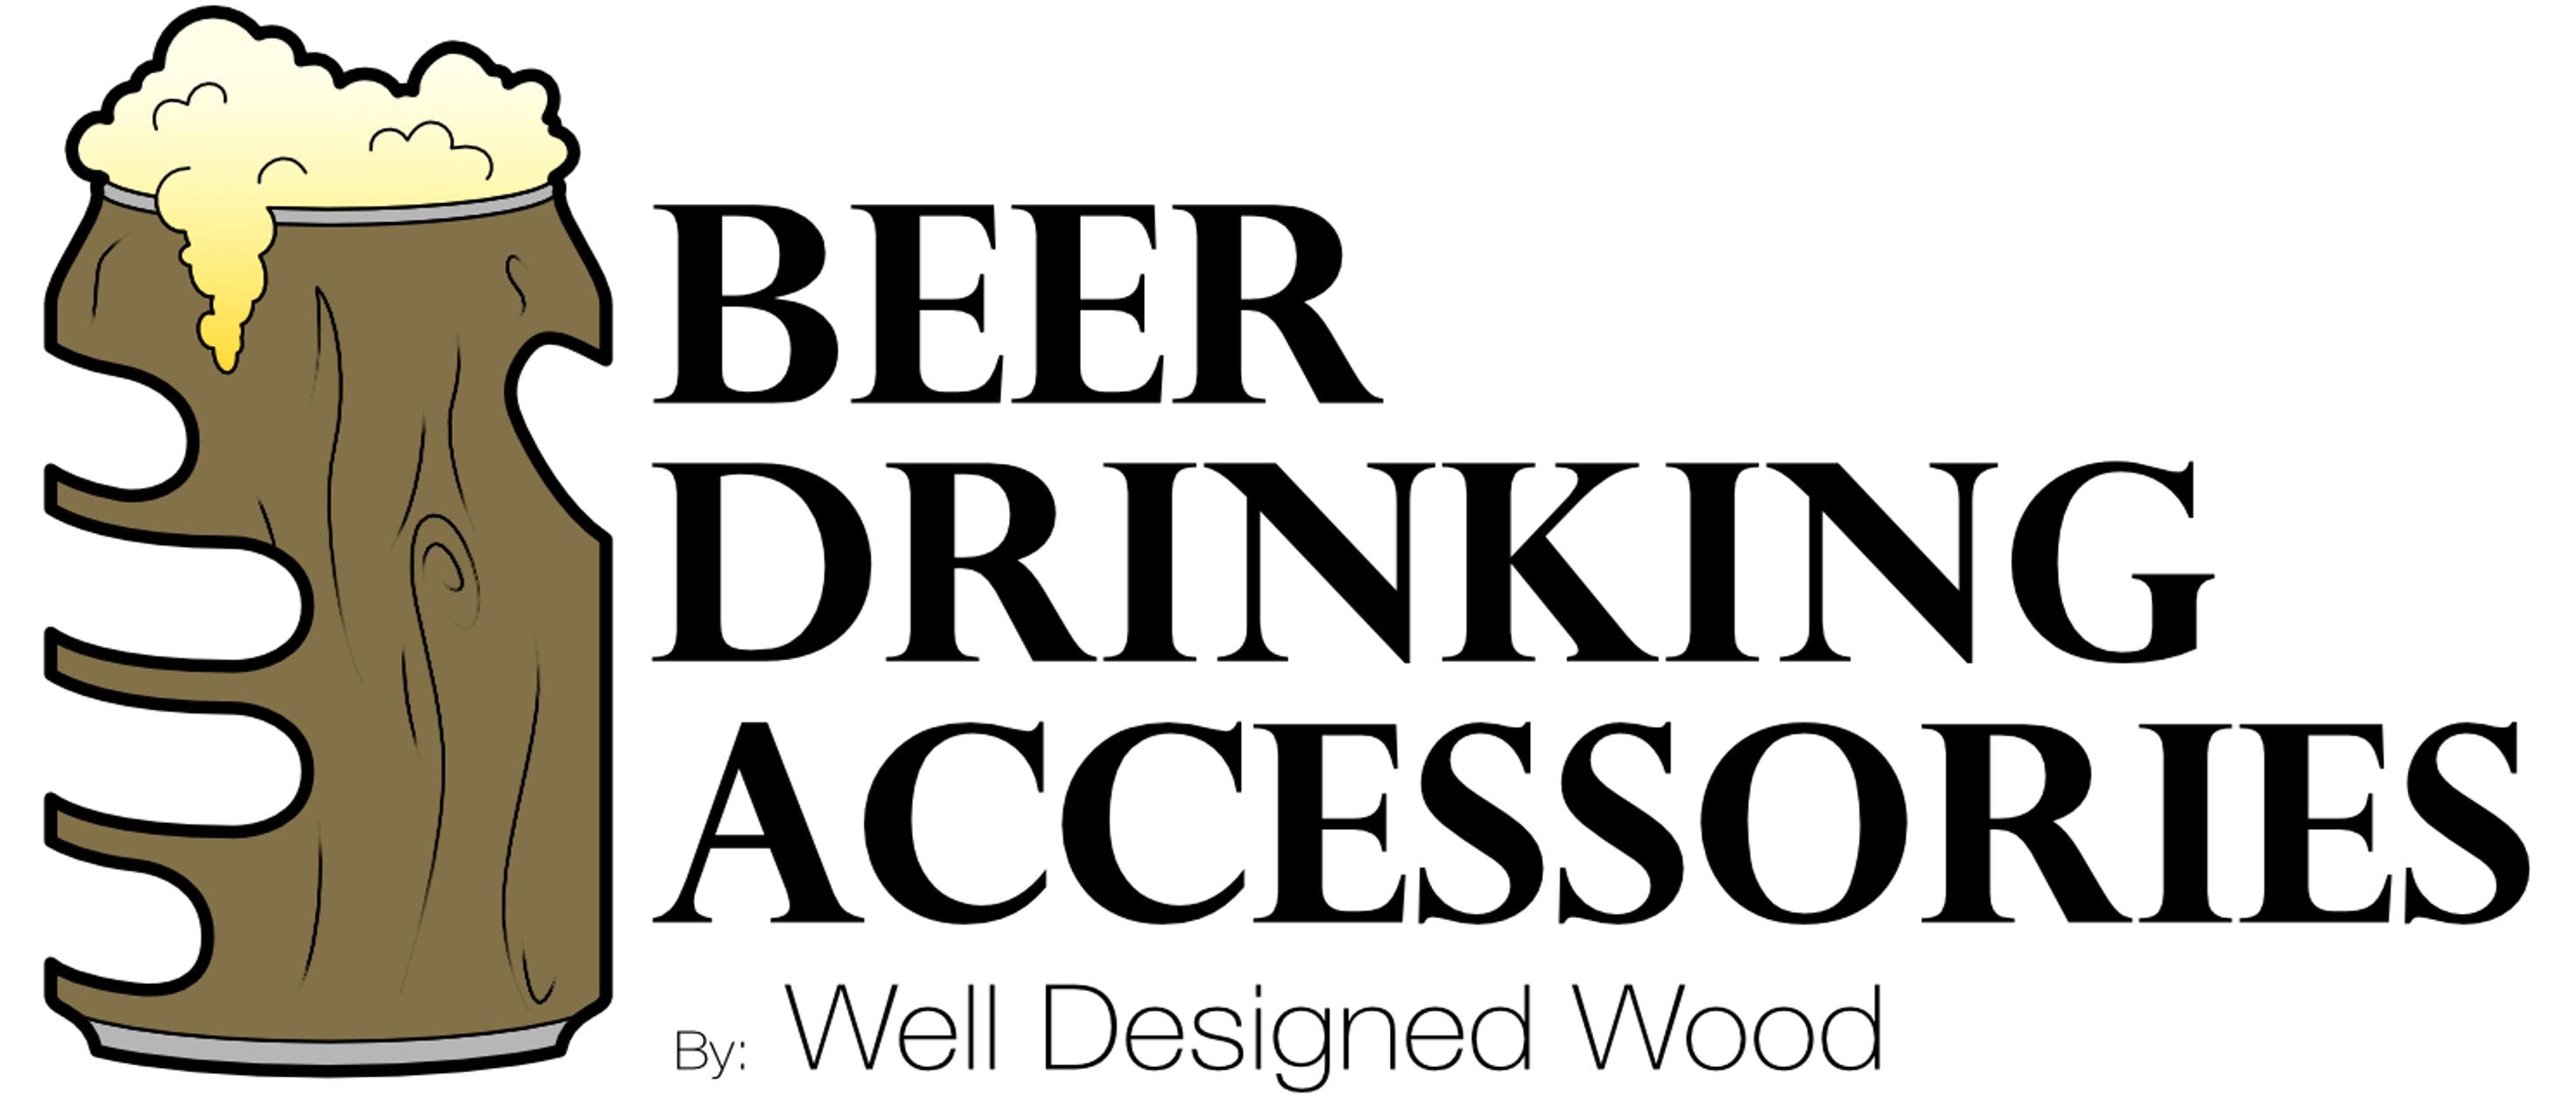 Engraved Buck Wooden Beer Can Cooler